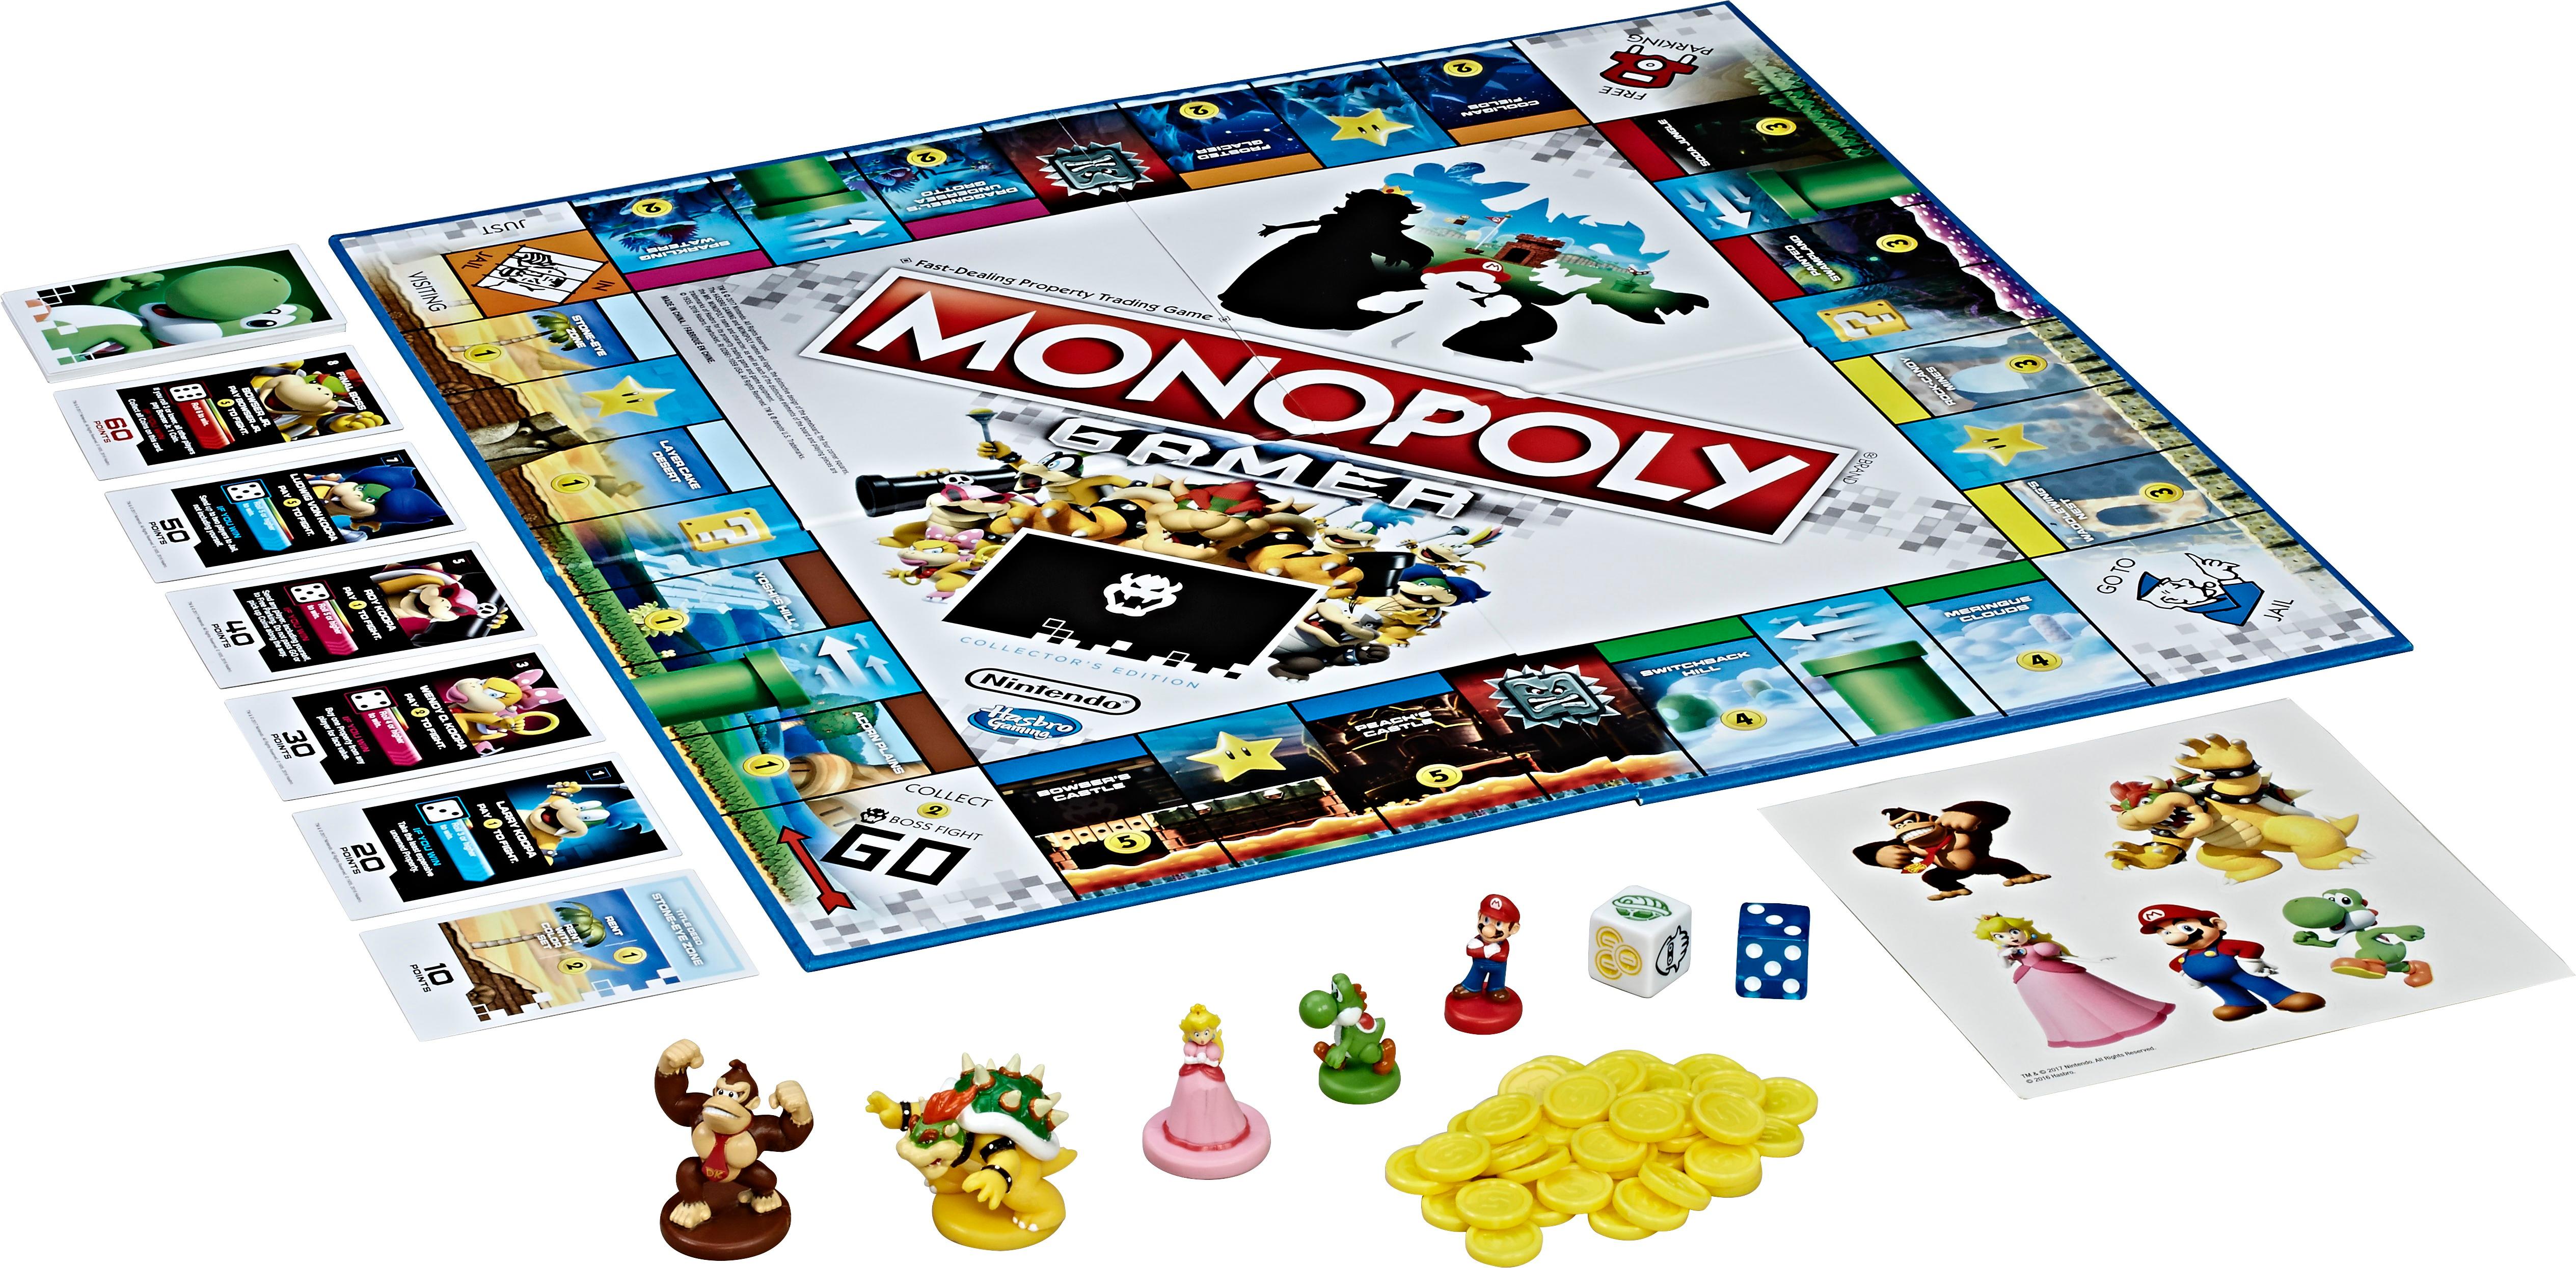 Hasbro Monopoly Classic Board Game C1009 - Best Buy